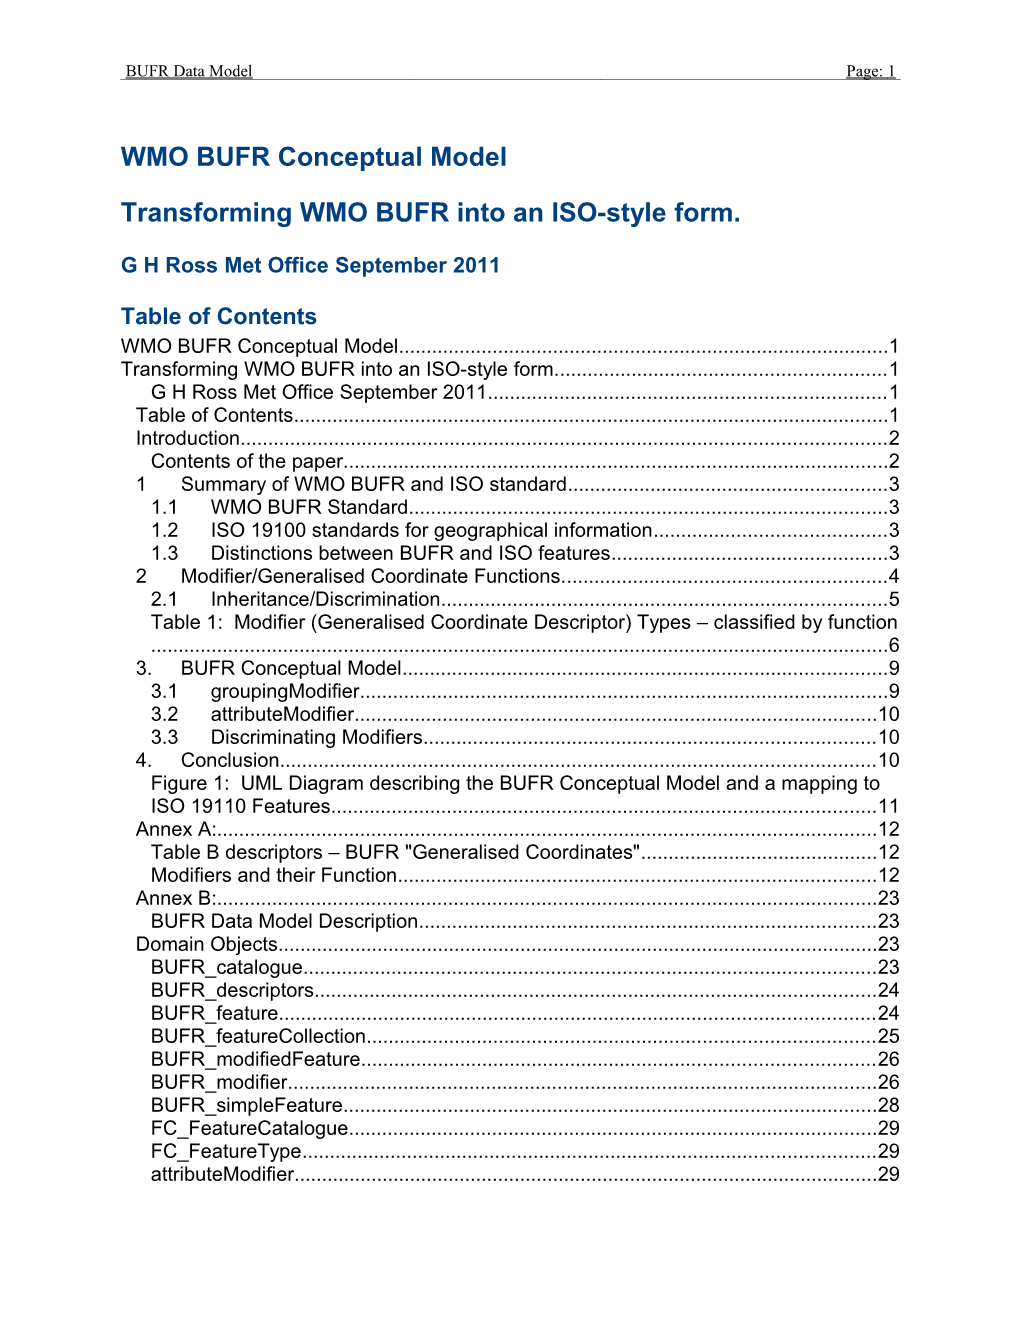 The WMO BUFR Data Model in Comparison to ISO 19109 Data Model